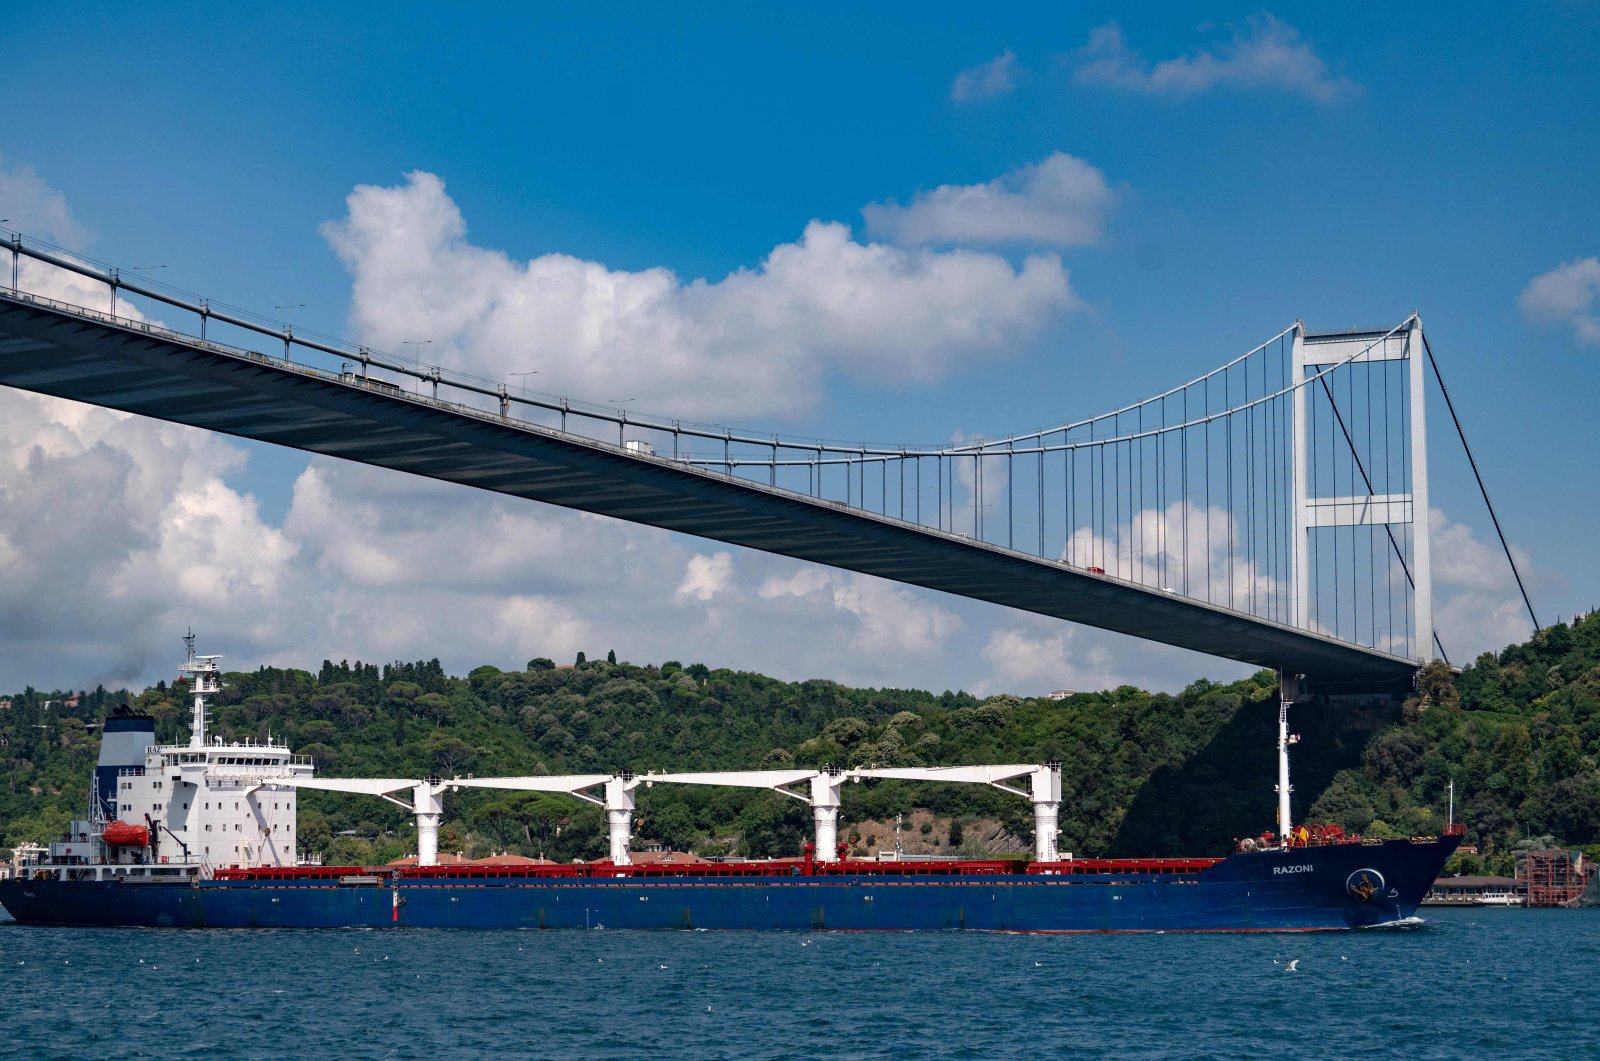 Sierra Leone-flagged cargo vessel Razoni sails along the Bosporus Strait past Istanbul, Aug. 3, 2022. (AFP Photo)